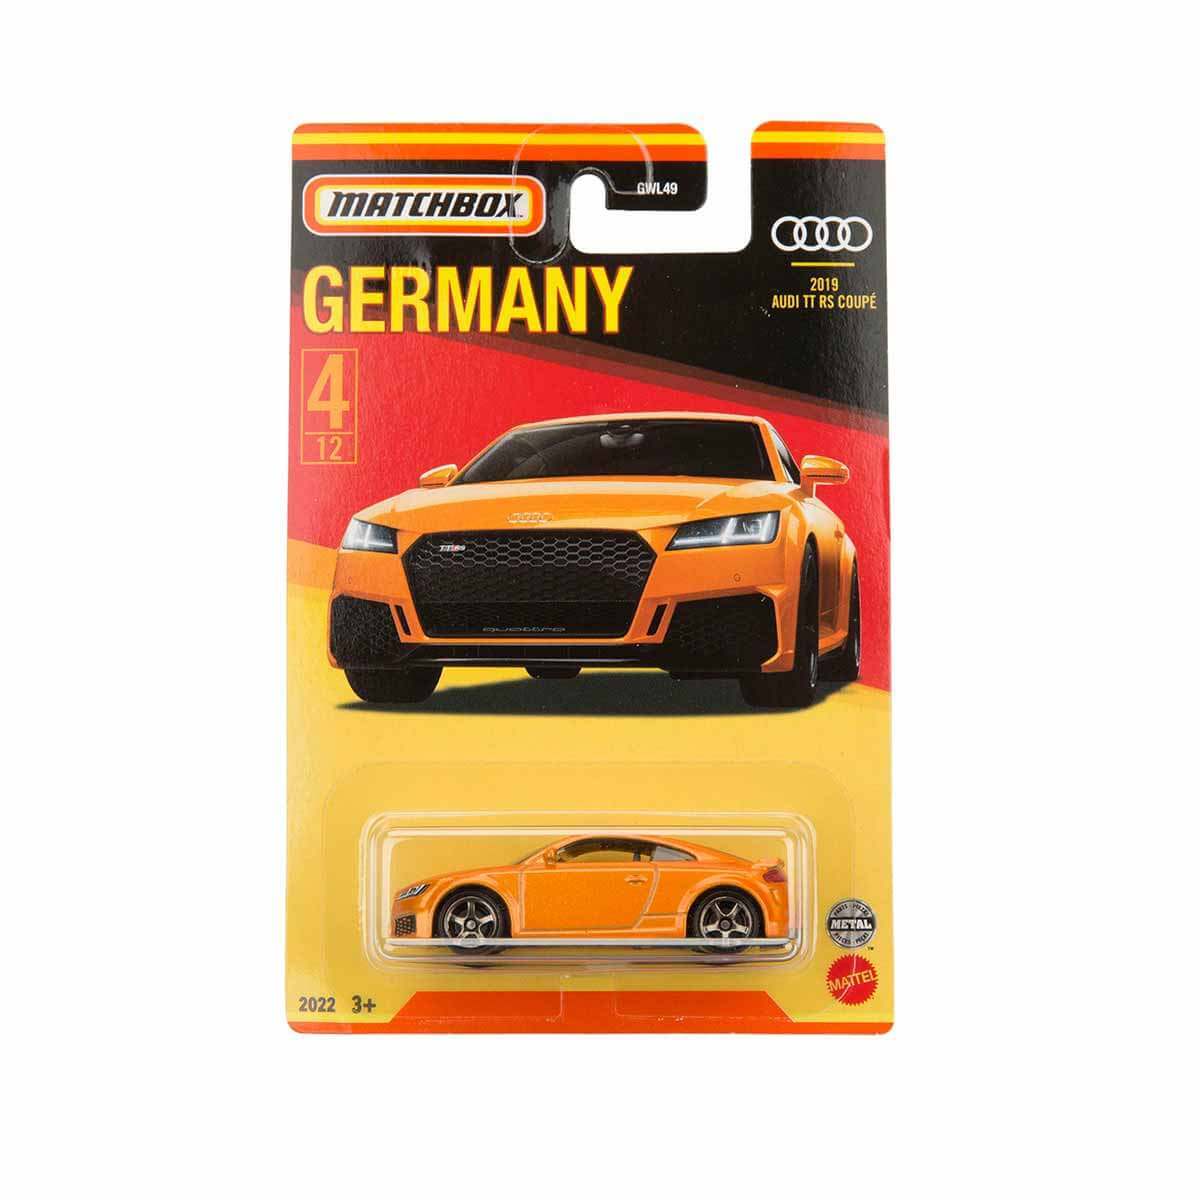 MATCHBOX Almanya Araçları Serisi GWL49 - 2019 Audi Tt Rs Coupé